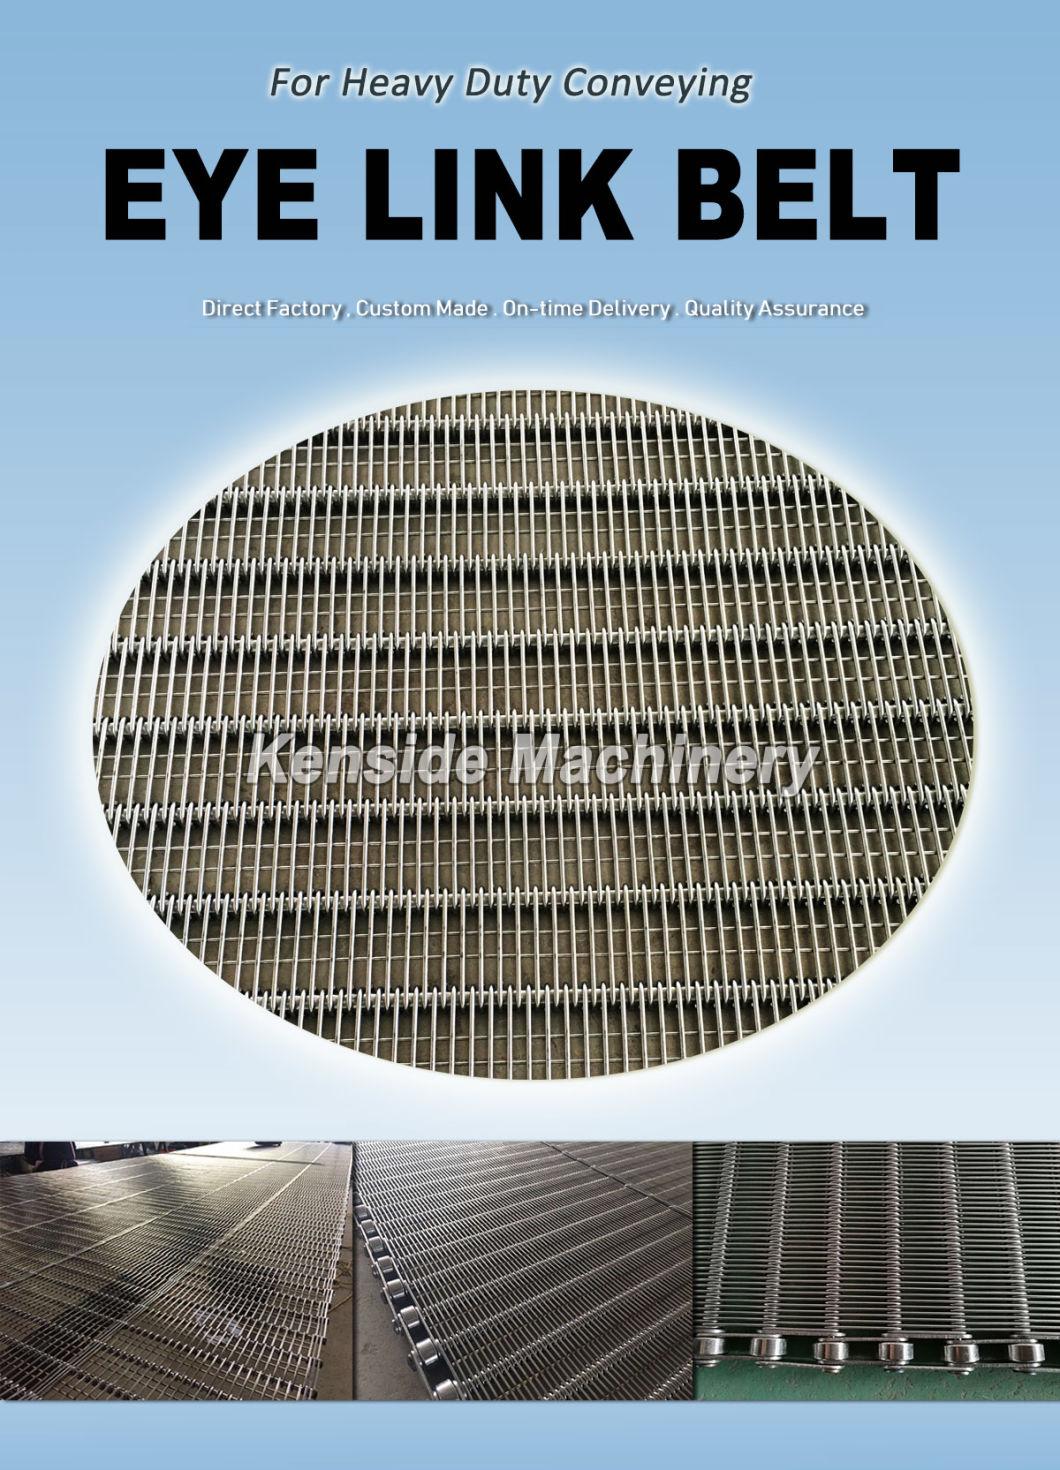 Manufacturer Stainless Steel 304 Eye Link Belt for Food Freezing Processing